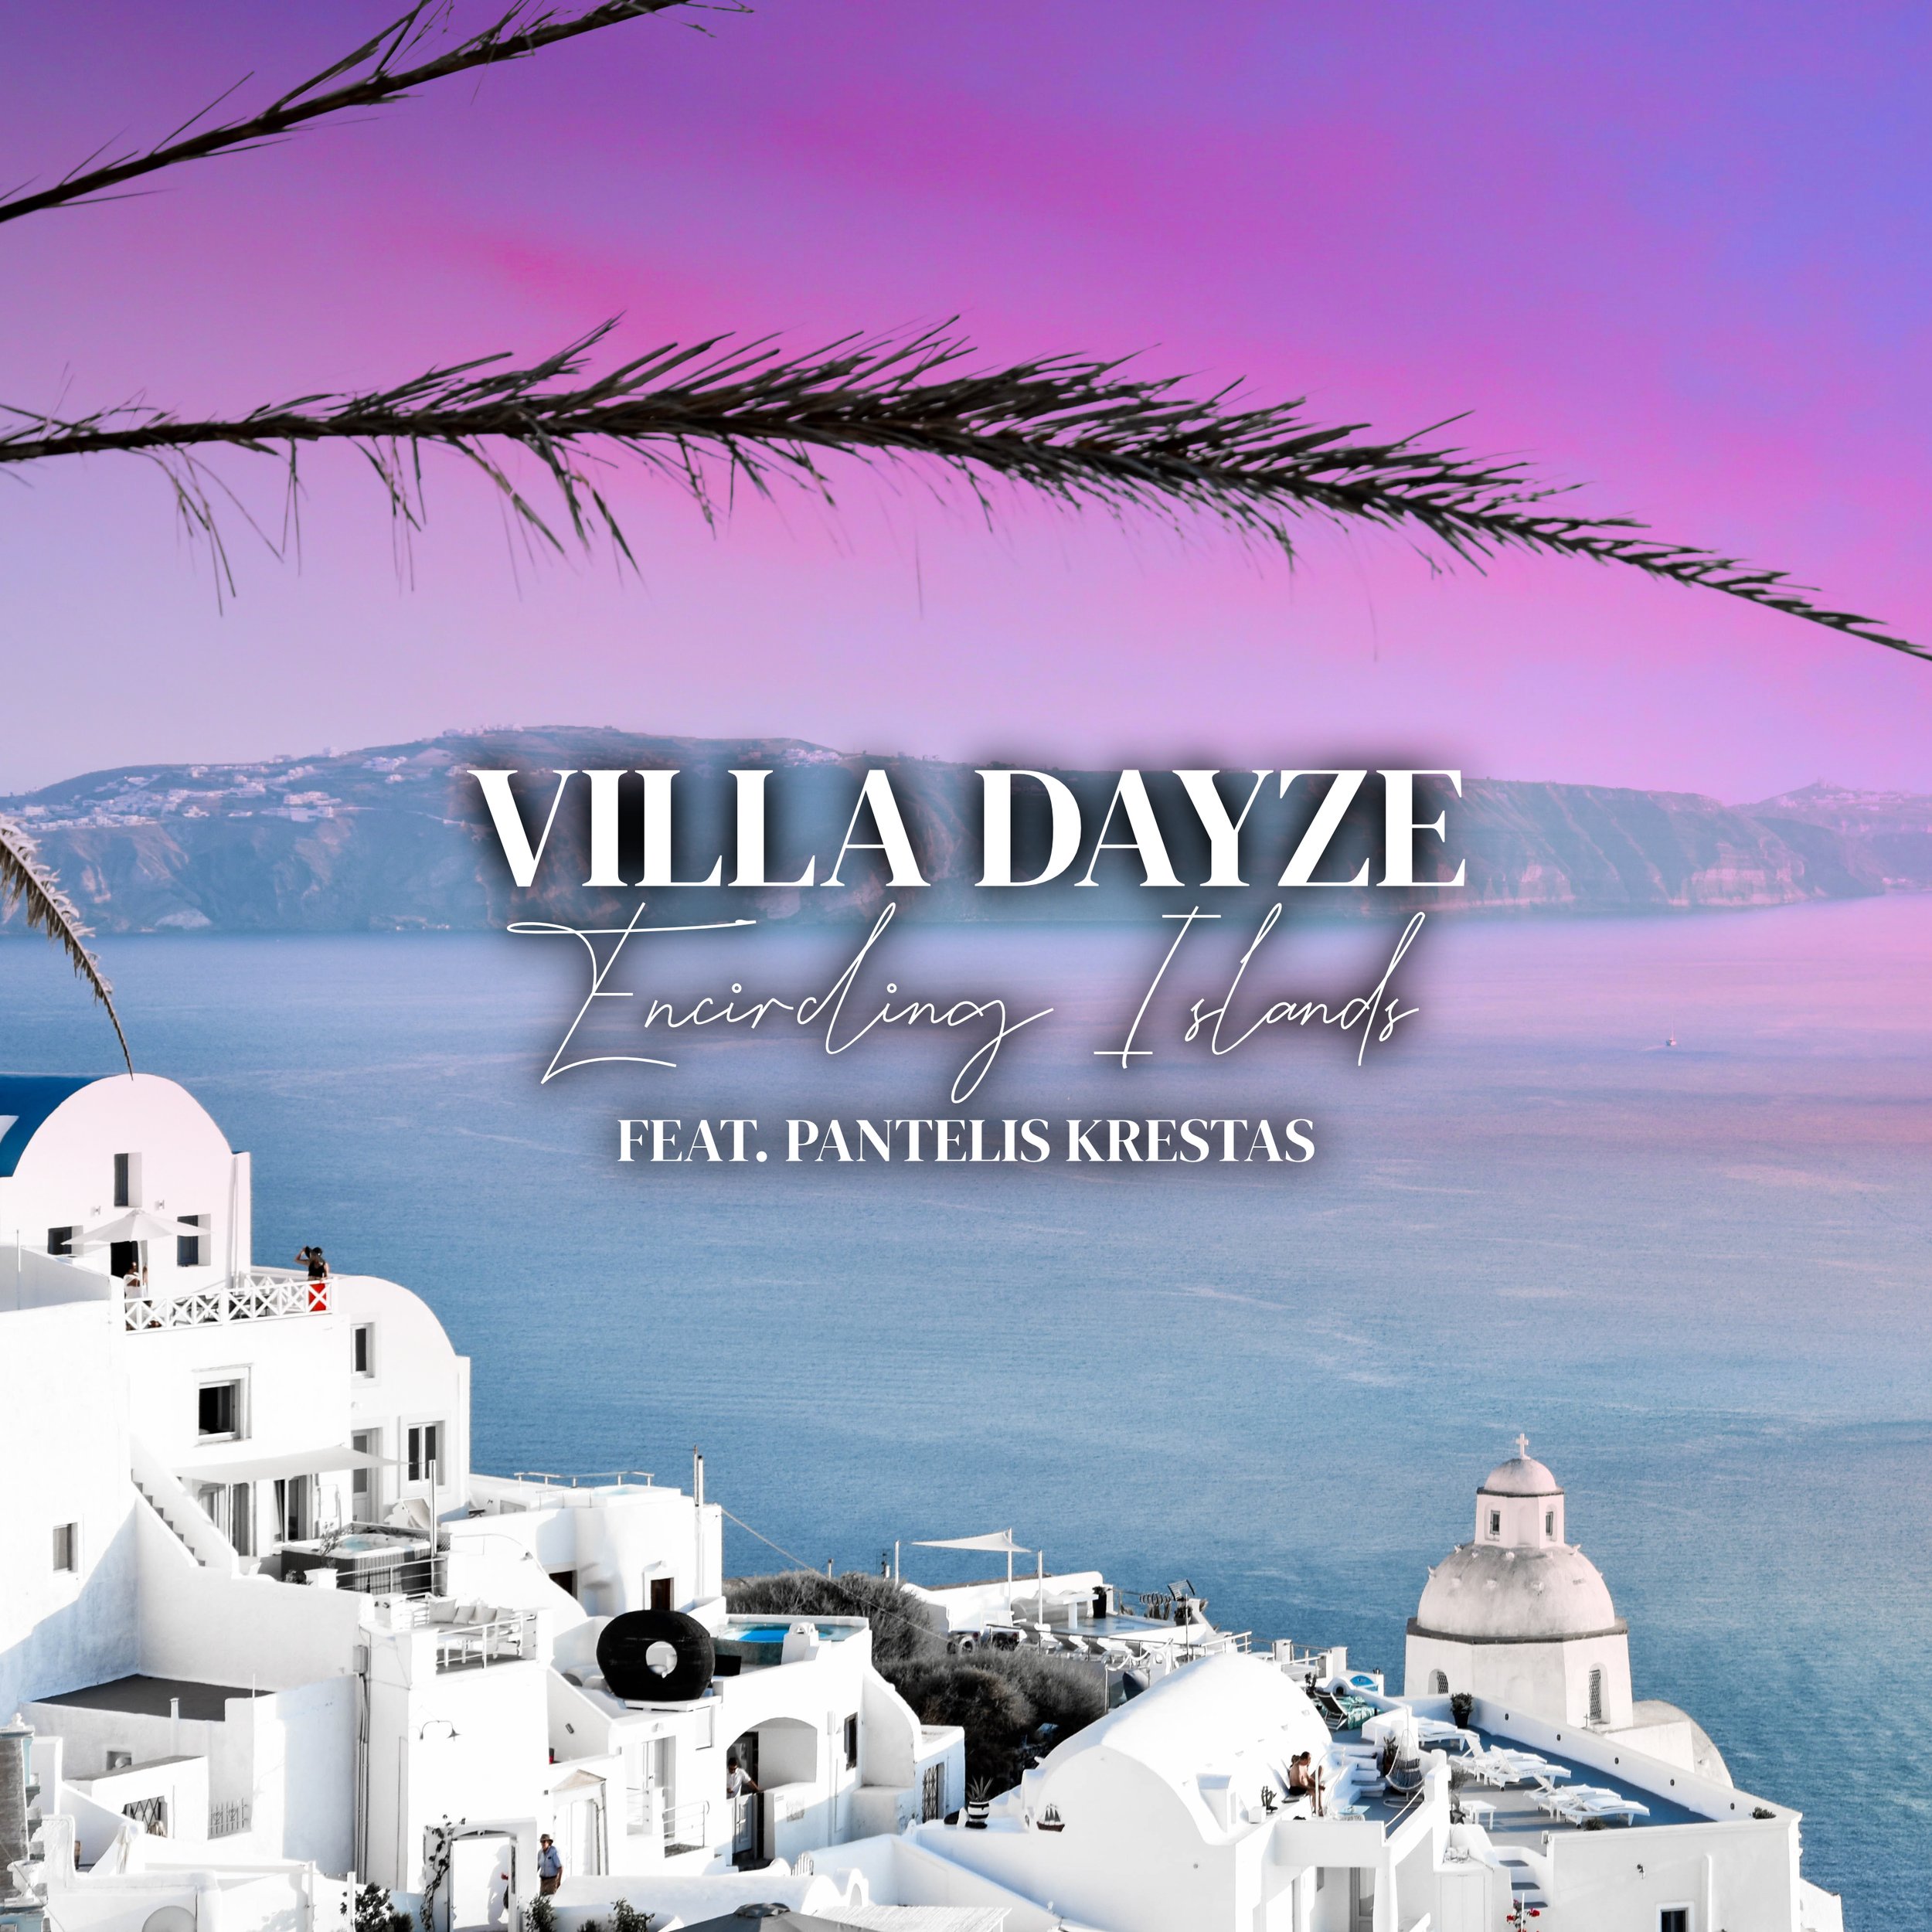 Villa Dayze ft. Pantelis Krestas - Encircling Island - Artwork (5).jpg